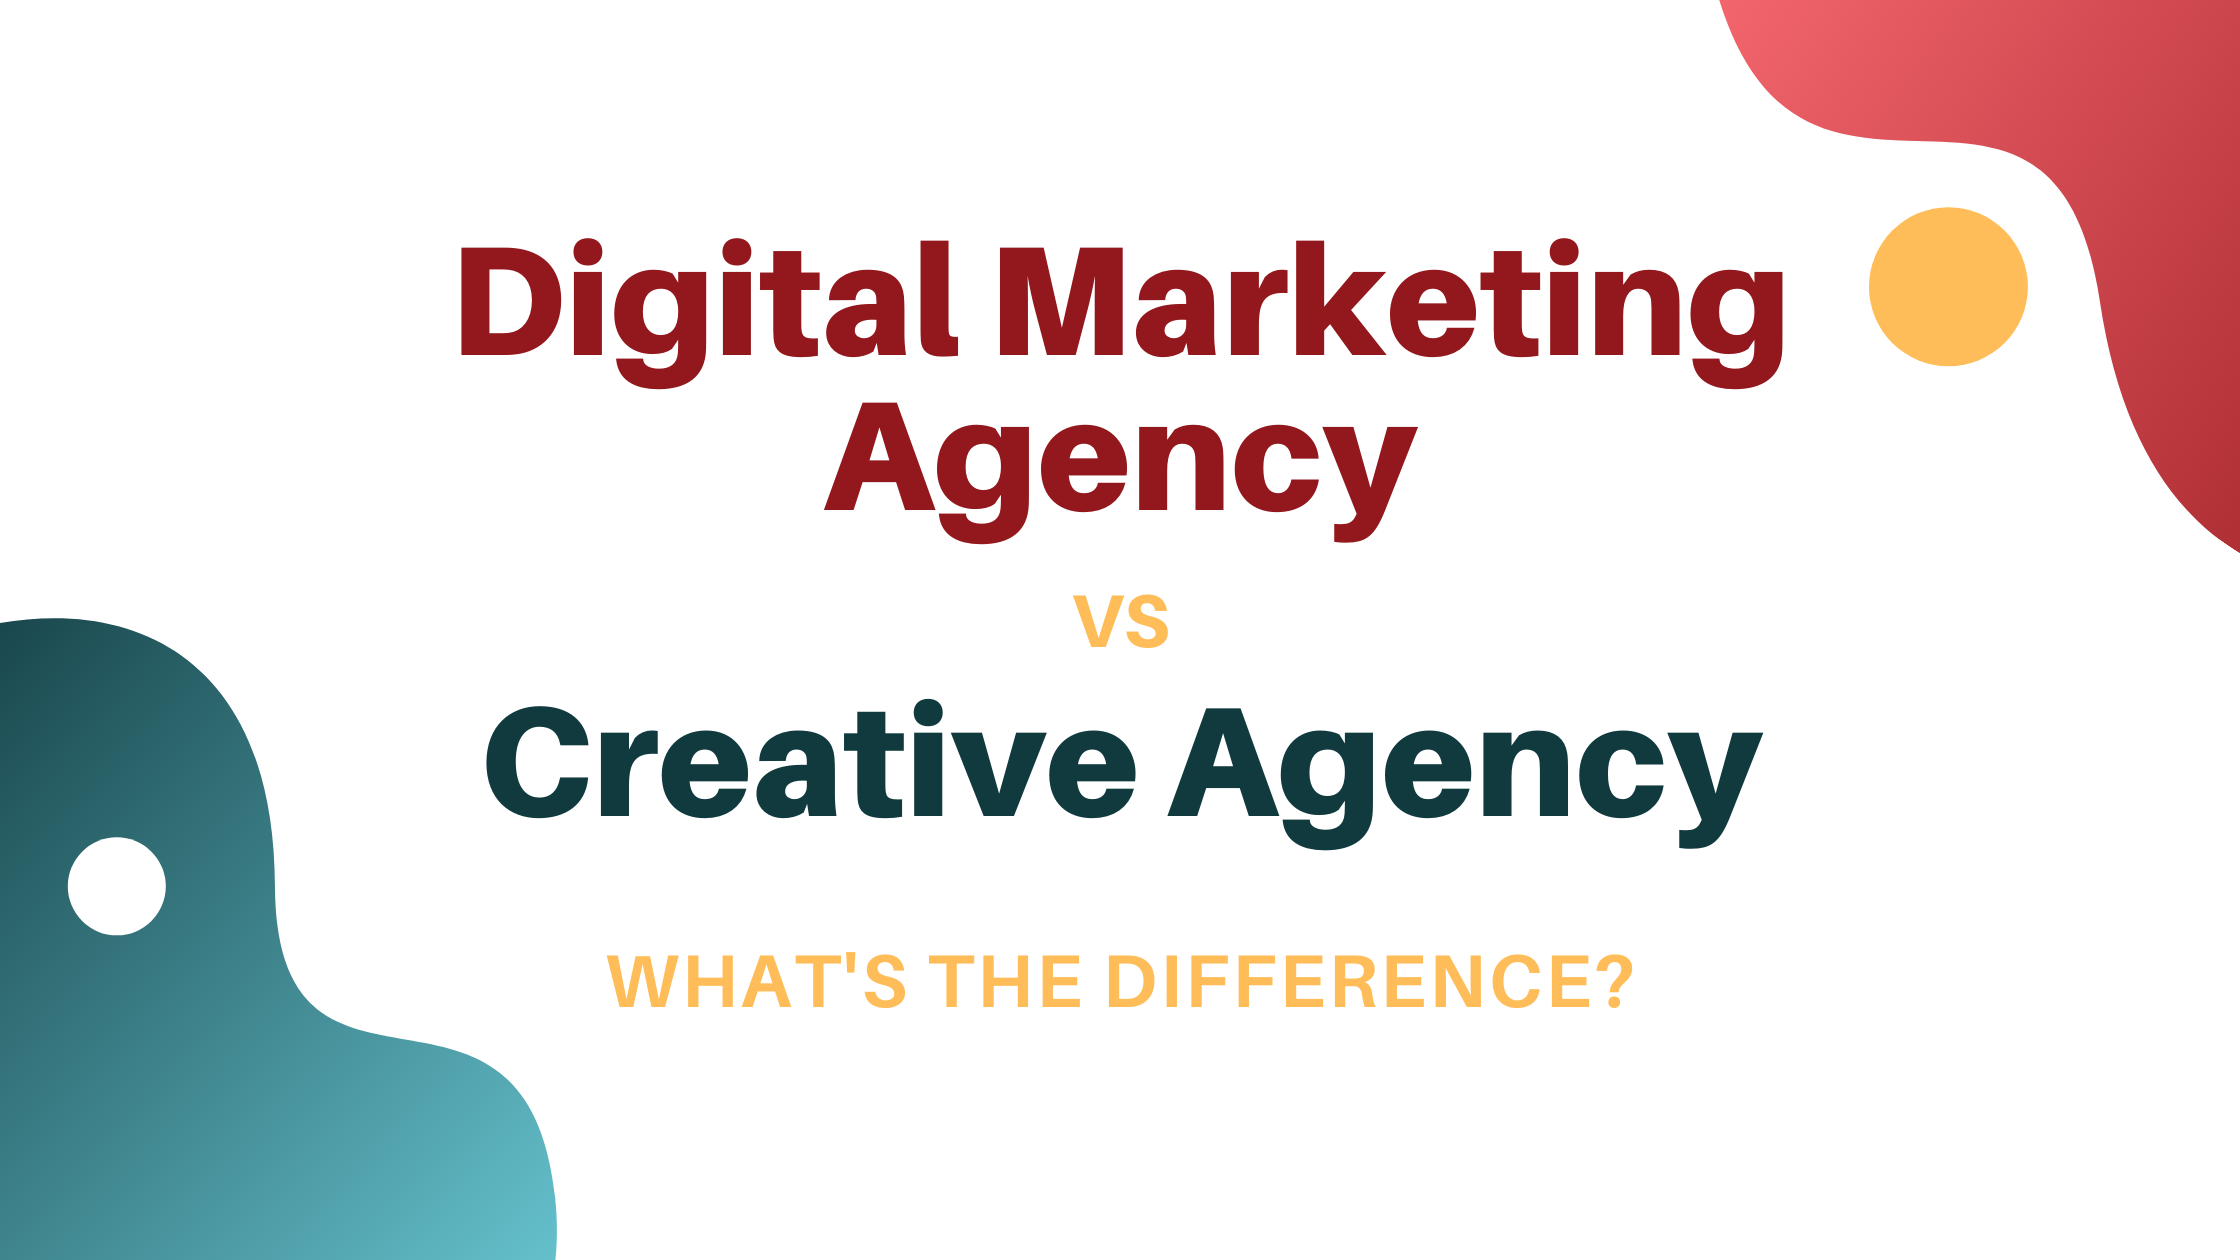 Digital Marketing Agency VS Creative Agency